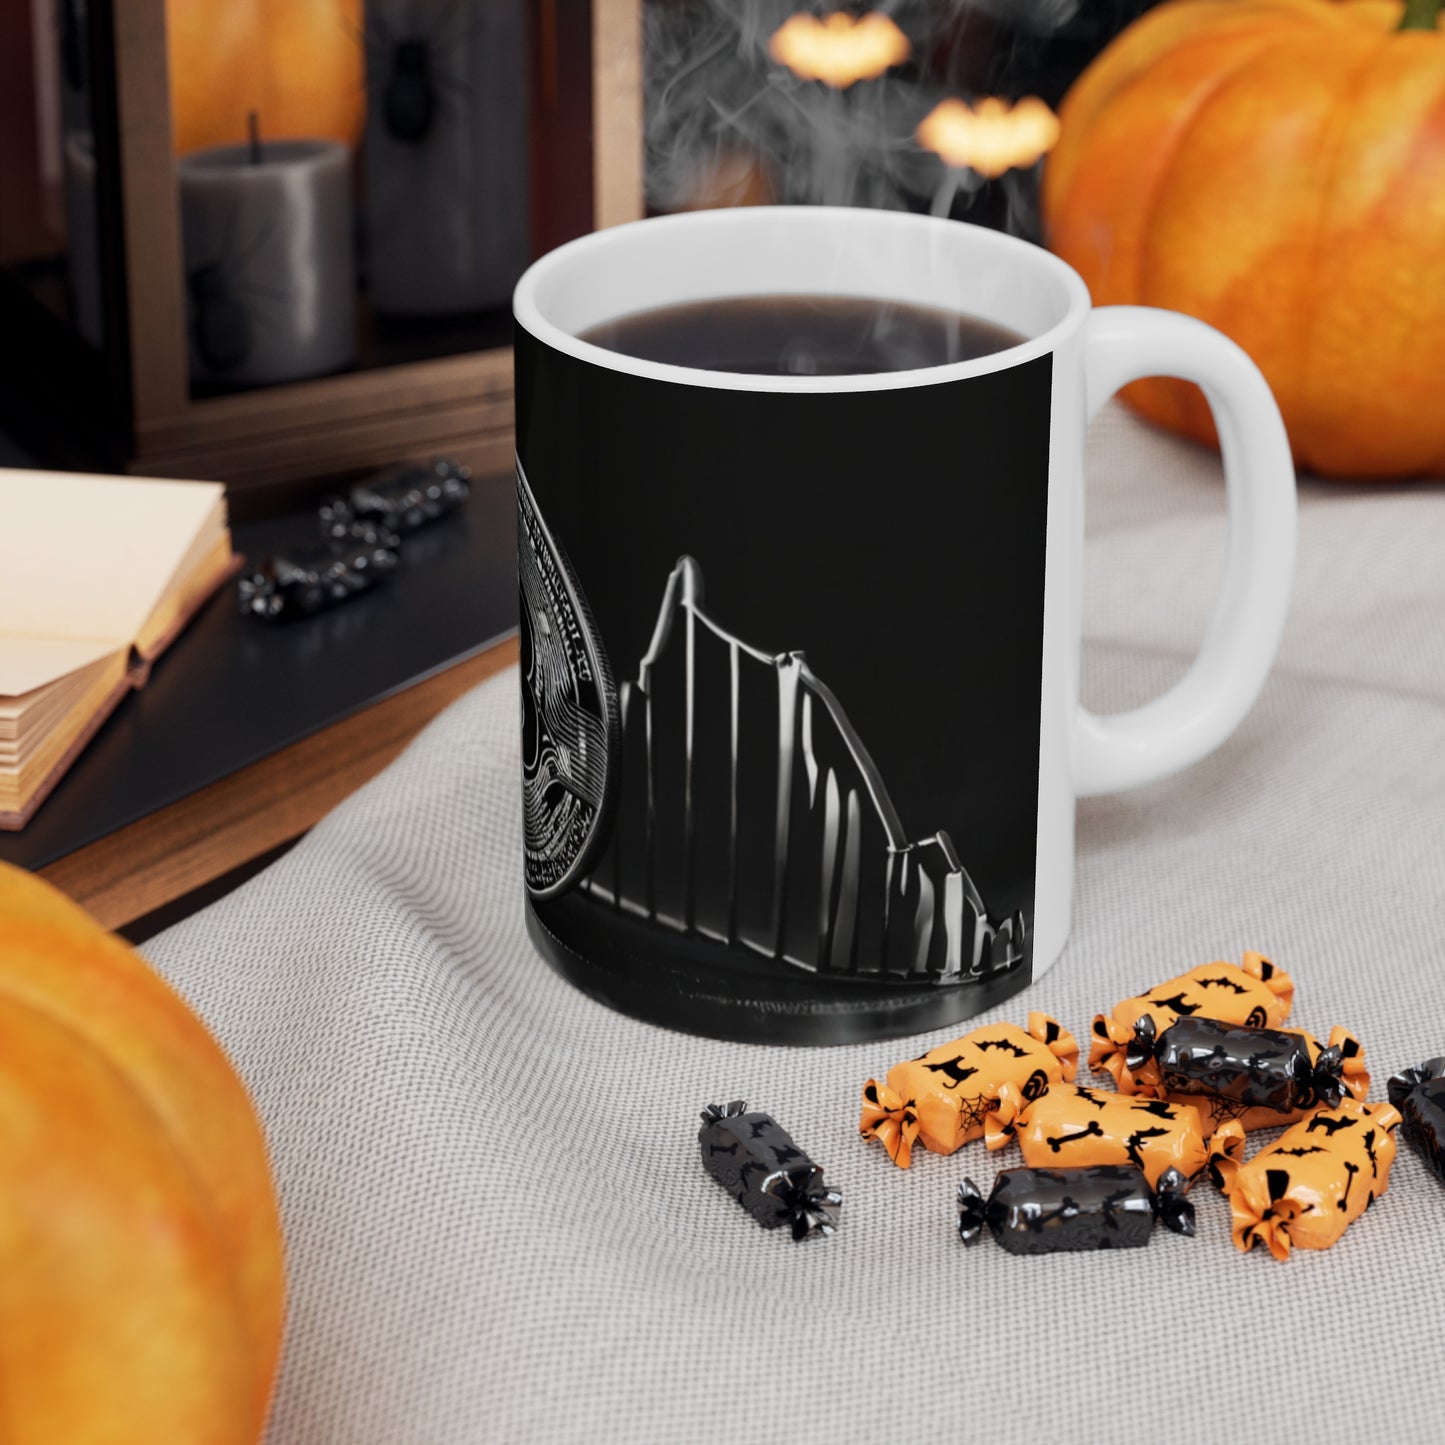 Greyscale Bitcoin Mug - Ceramic Coffee Mug 11oz